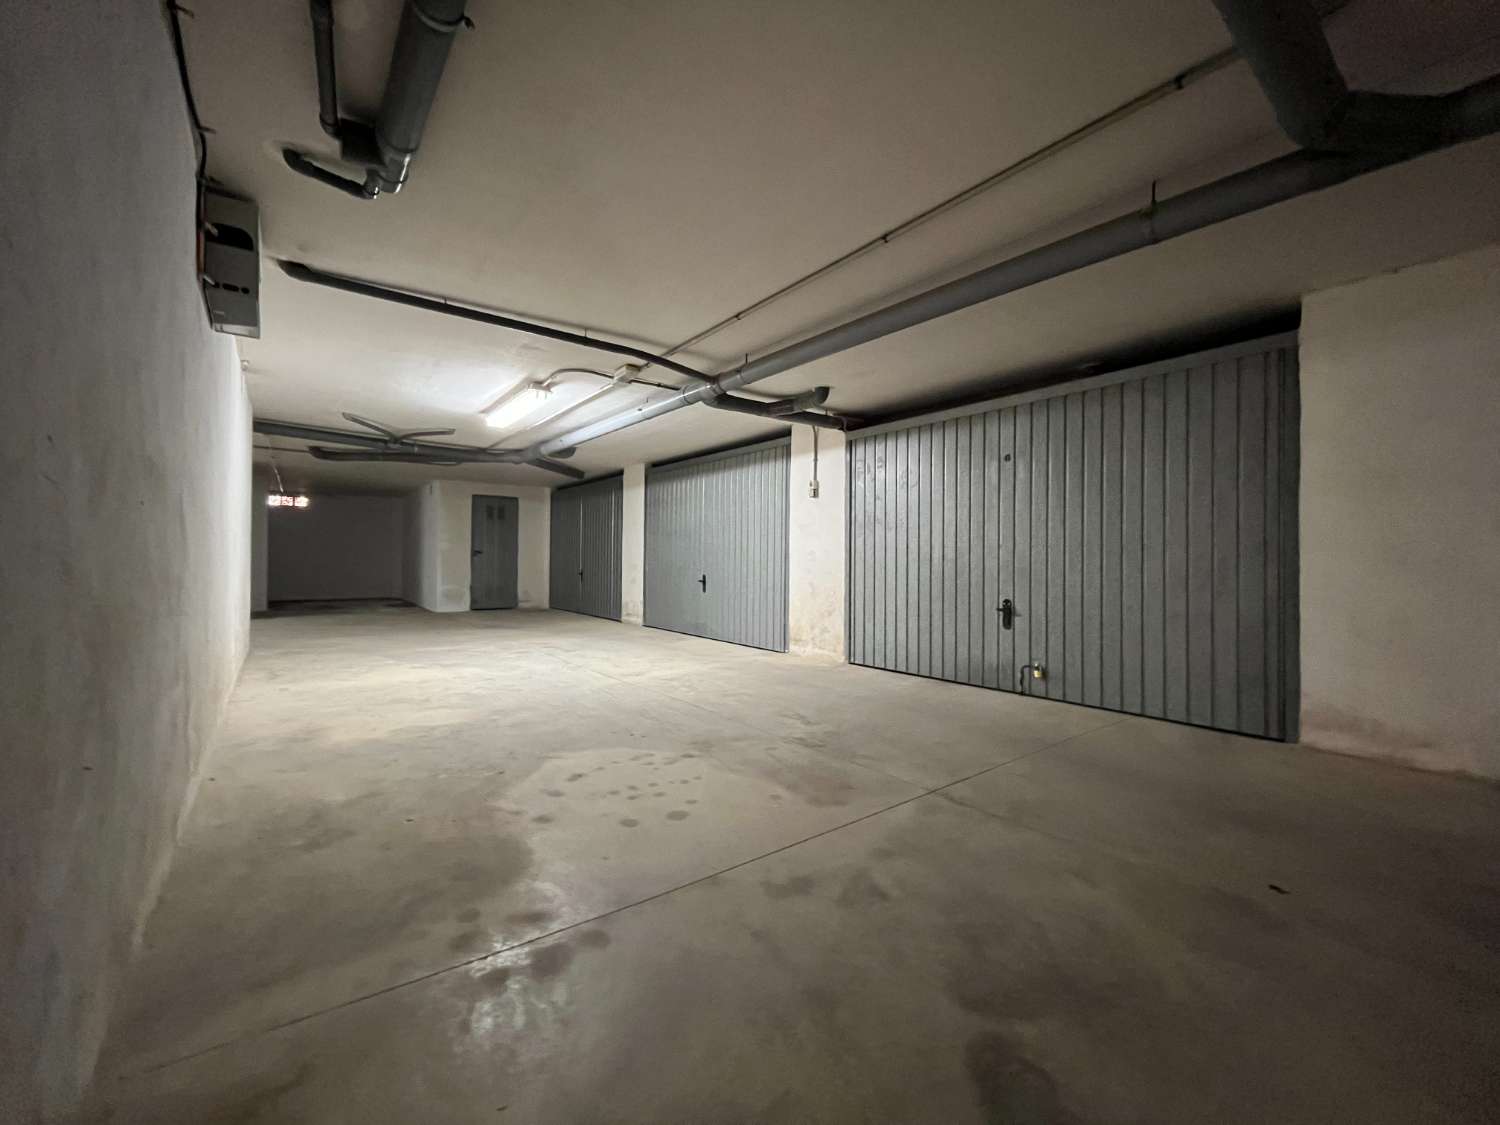 Grote afgesloten ondergrondse garage